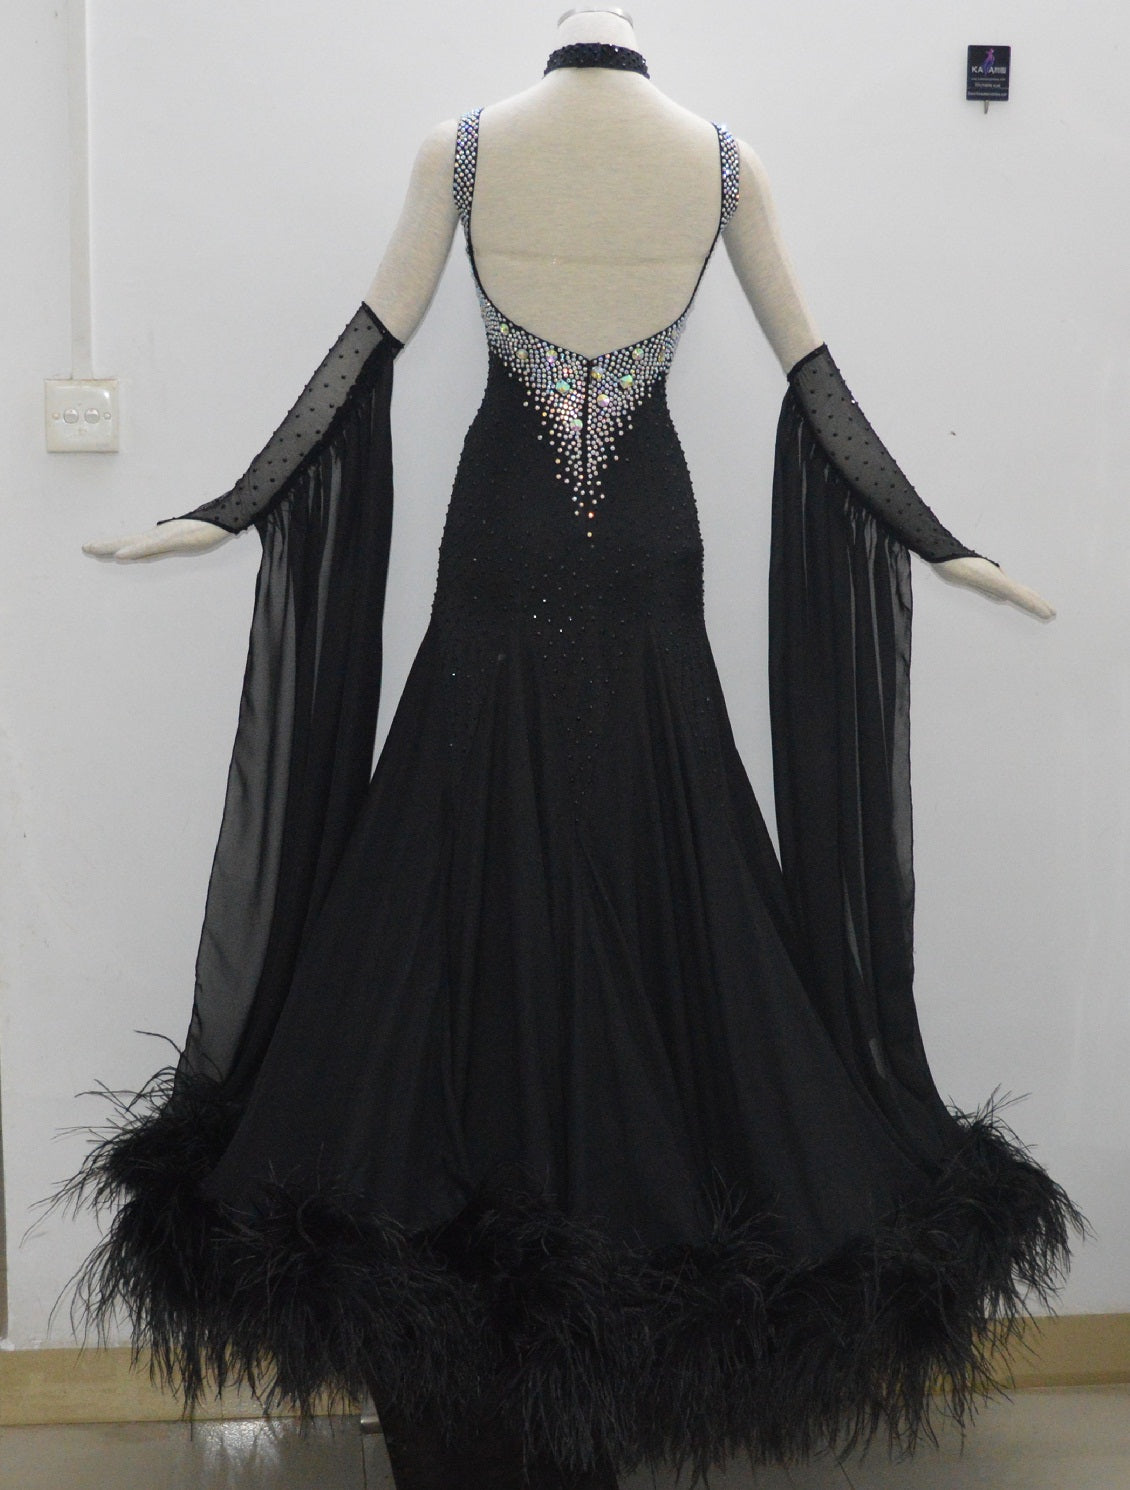 Choosing a ballroom dancing gown for your body type | by Dance dress shop |  Medium